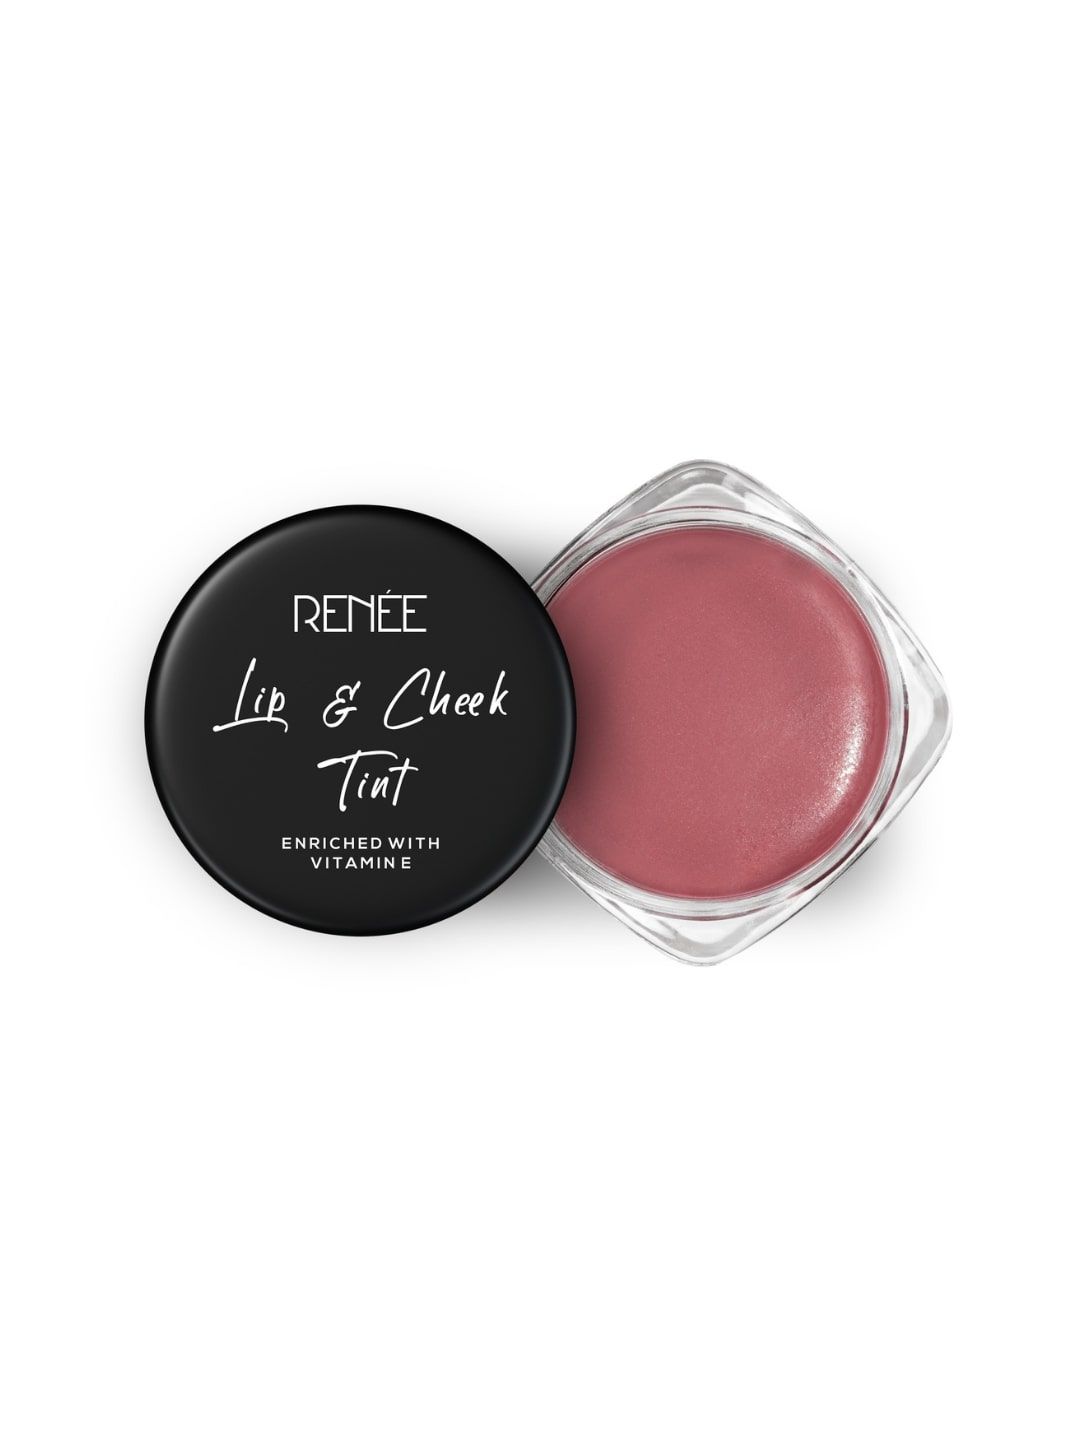 RENEE Lip & Cheek Tint - Bare Pink 8g Price in India